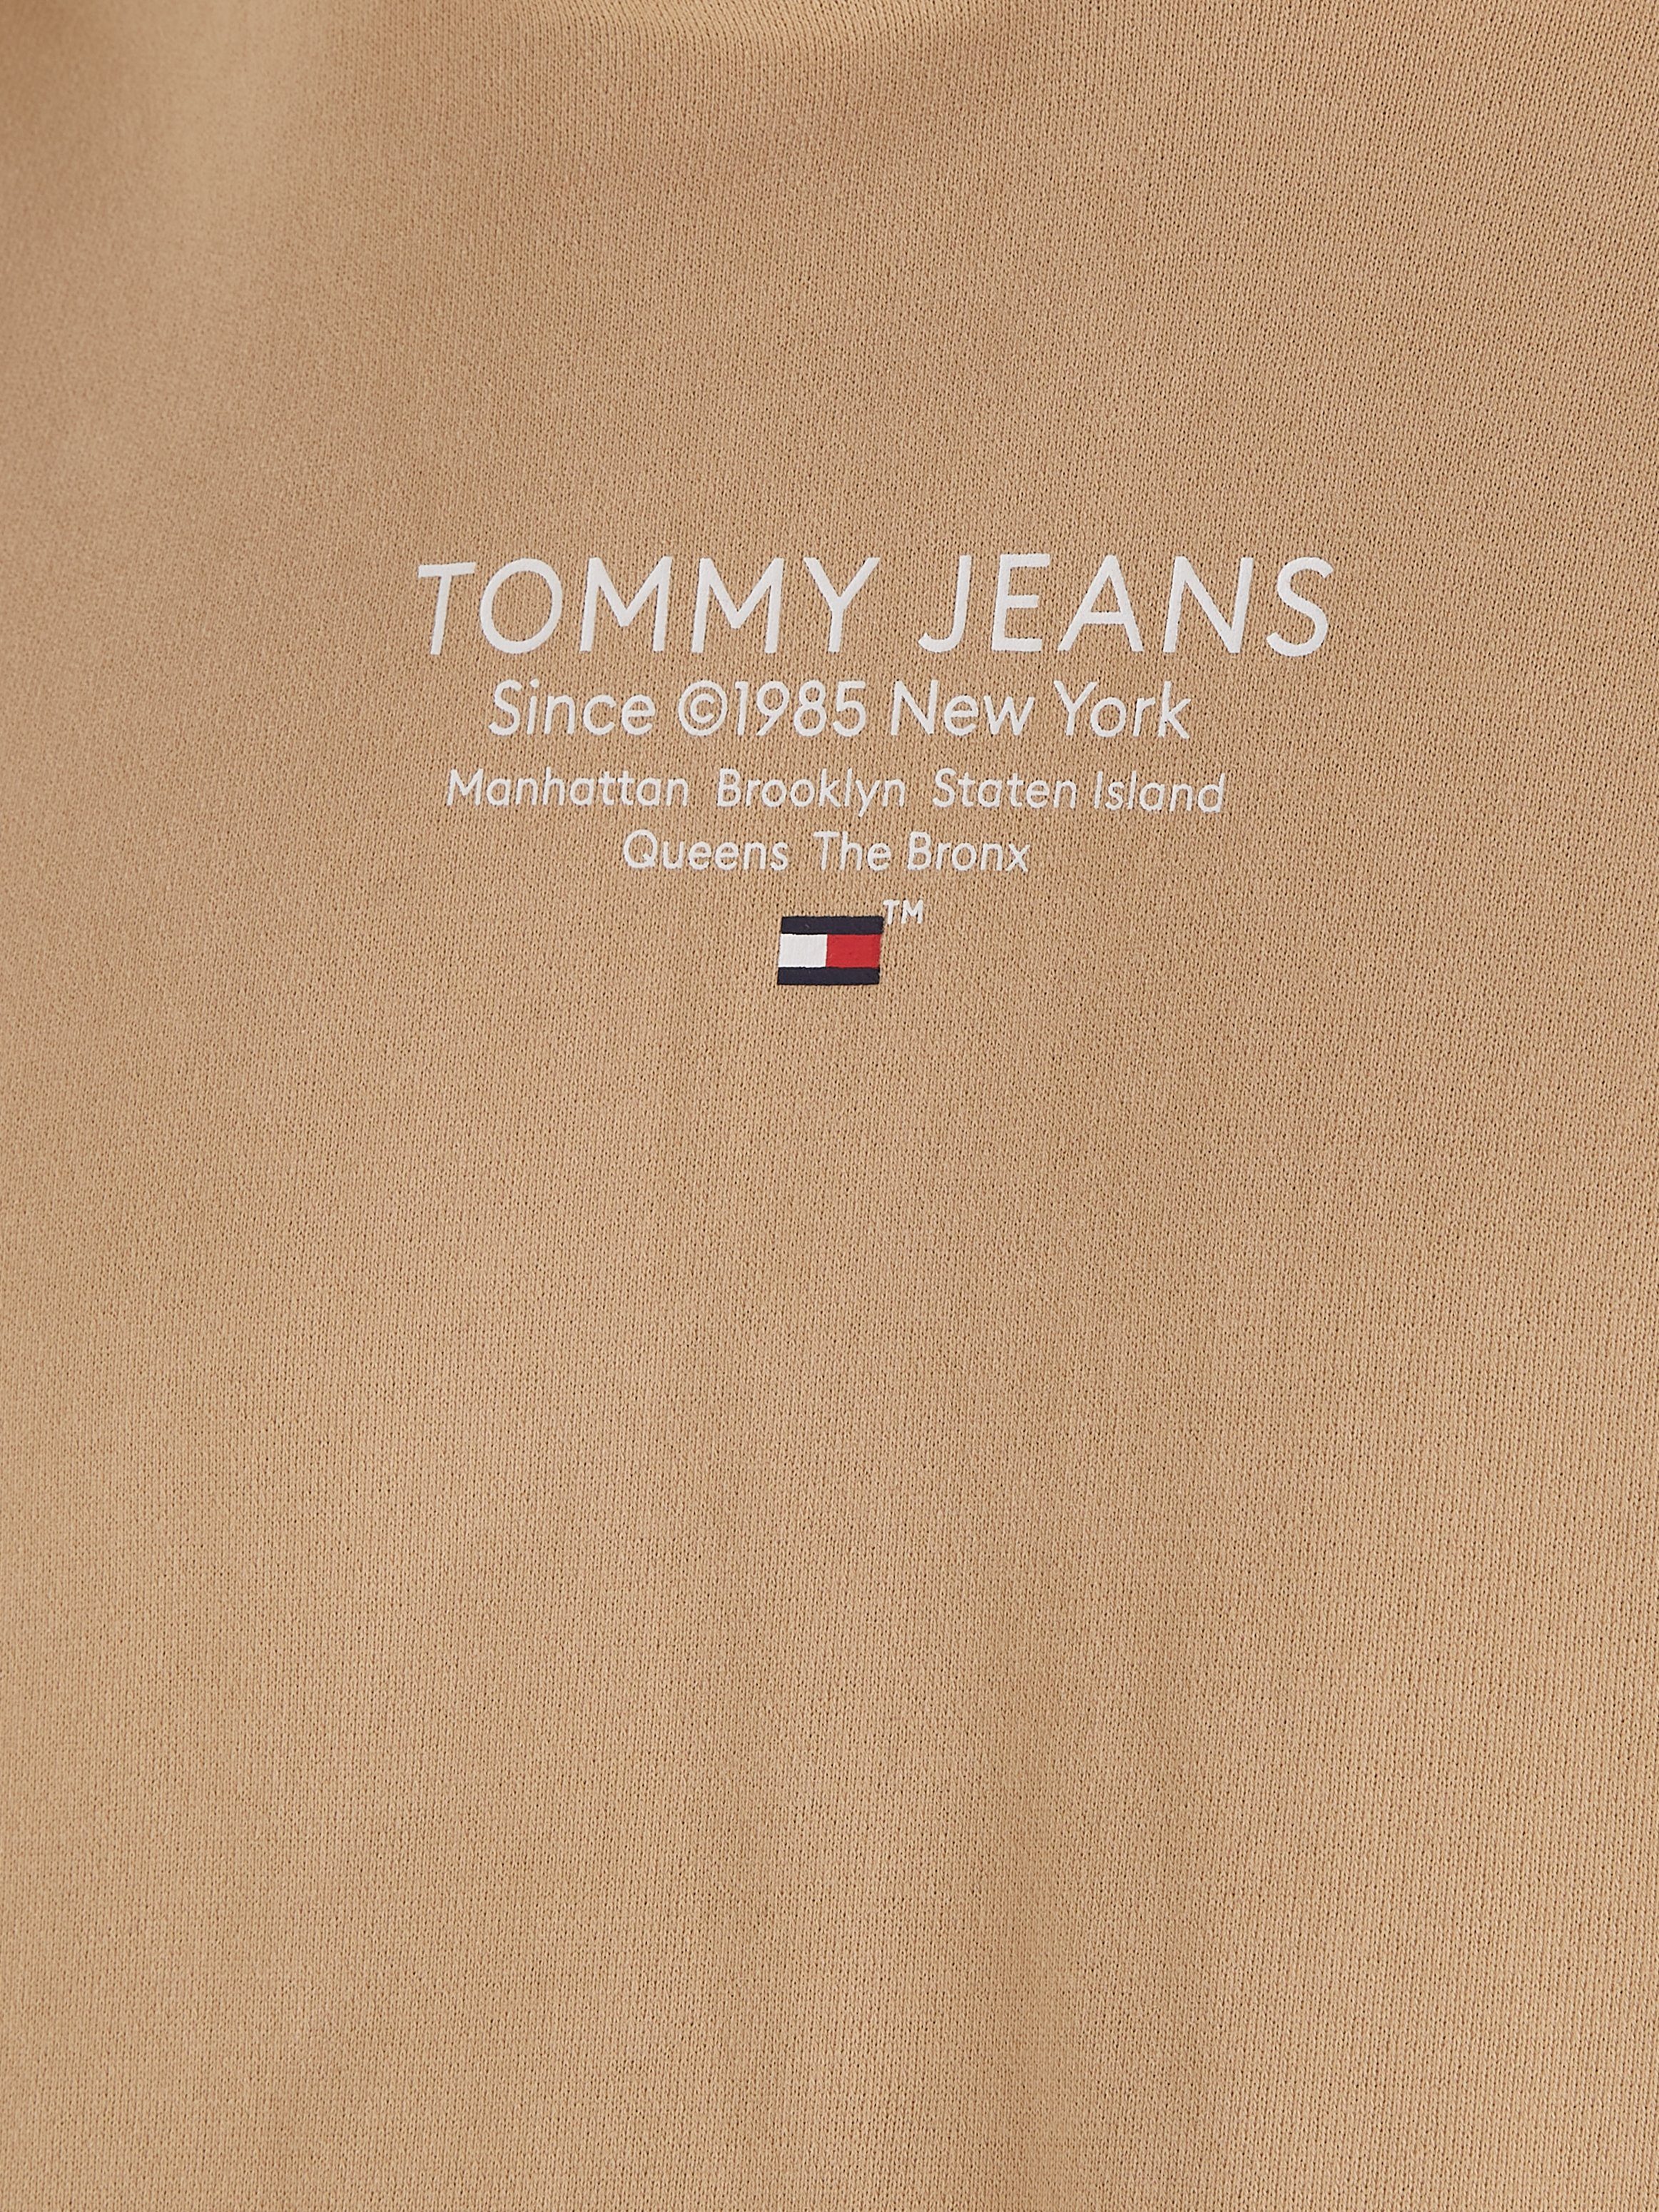 Kapuzensweatshirt EXT Tawny ESNTL Jeans REG TJM Tommy Kordeln HOOD GRAPHIC Sand mit